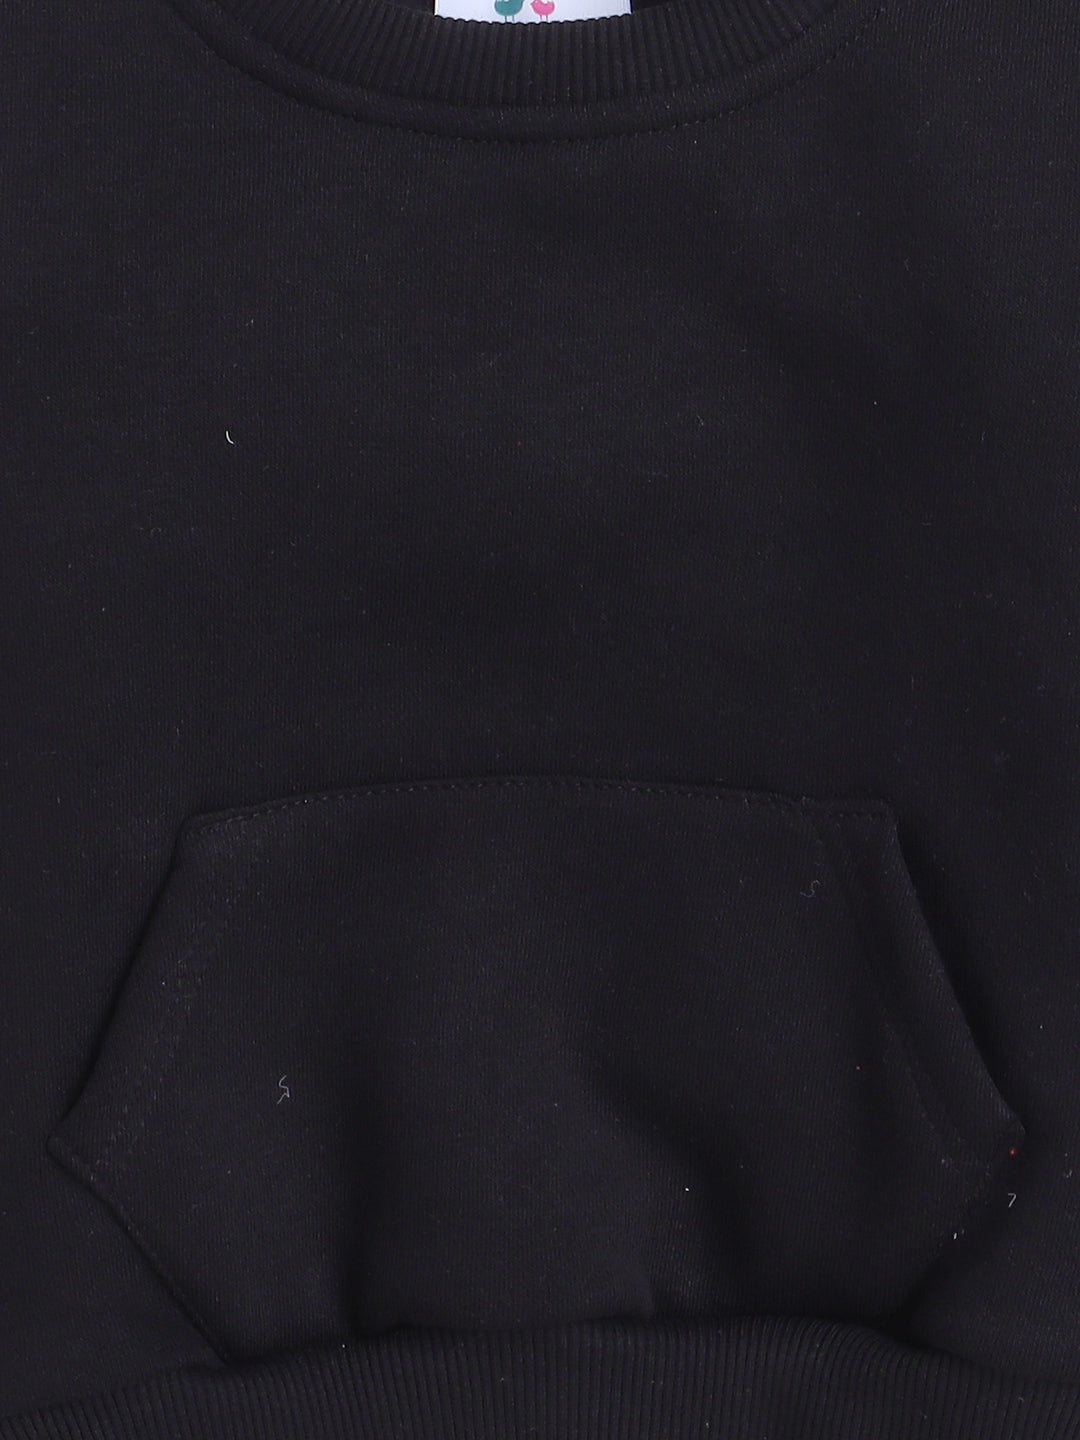 Knitting Doodles Kid's Sweatshirt with Warm Fleece and Pocket in front- Black